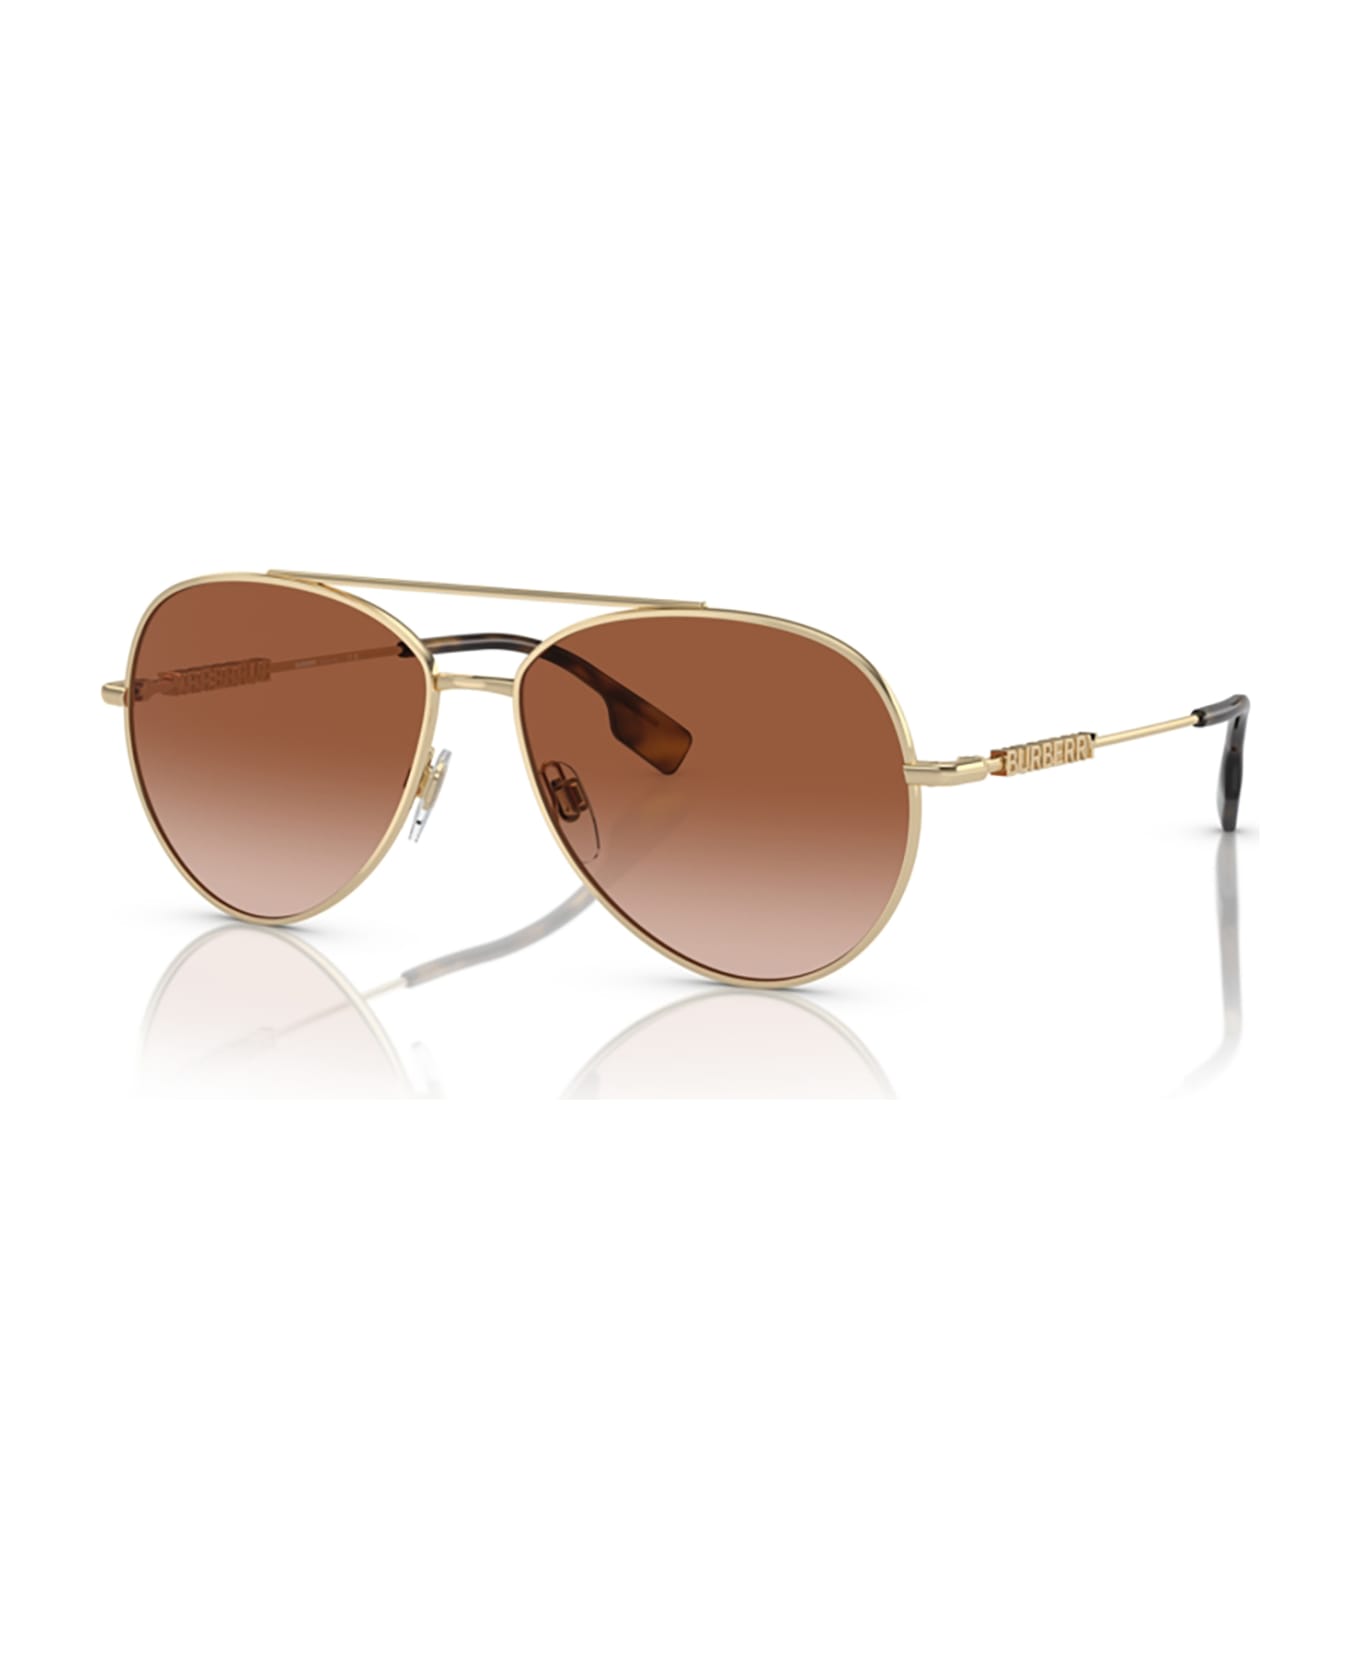 Burberry Eyewear Be3147 Light Gold Sunglasses - Light gold サングラス